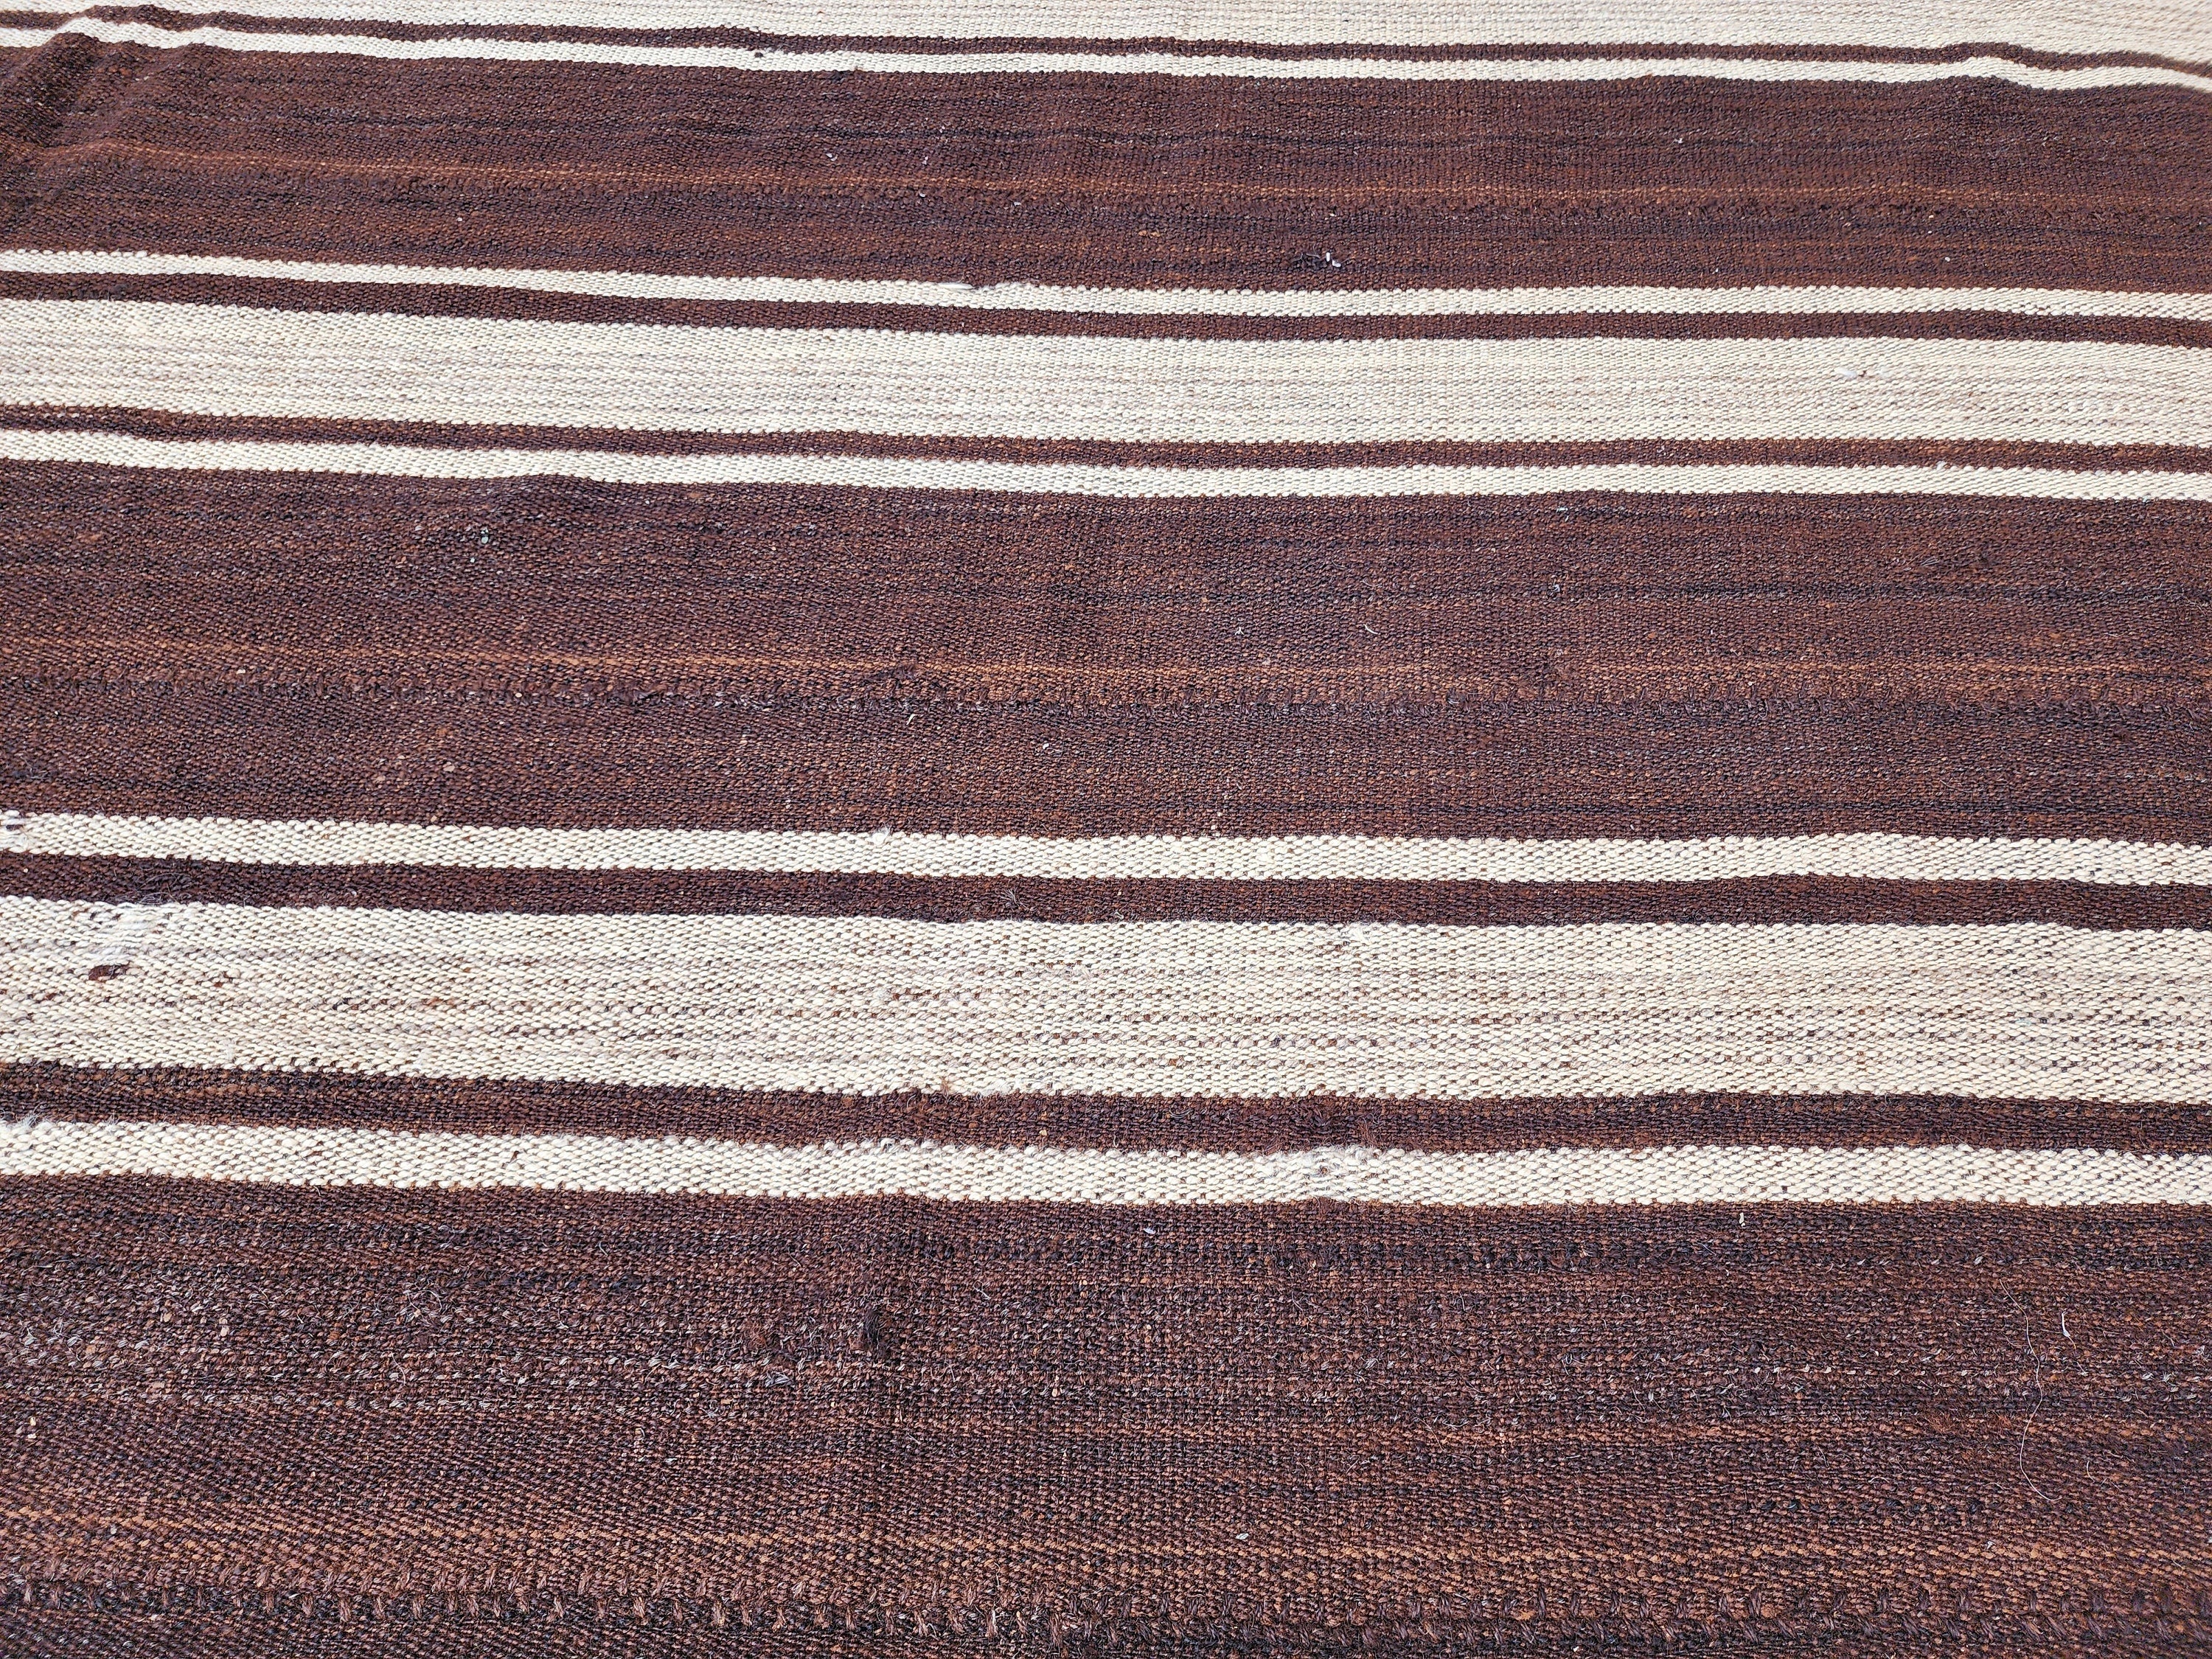 Brown and White Striped Turkish Kilim Rug, 8 x 6 ft Natural Wool Vintage Flatweave Rug for Boho Retro Living Room Decor, Persian Area Rug